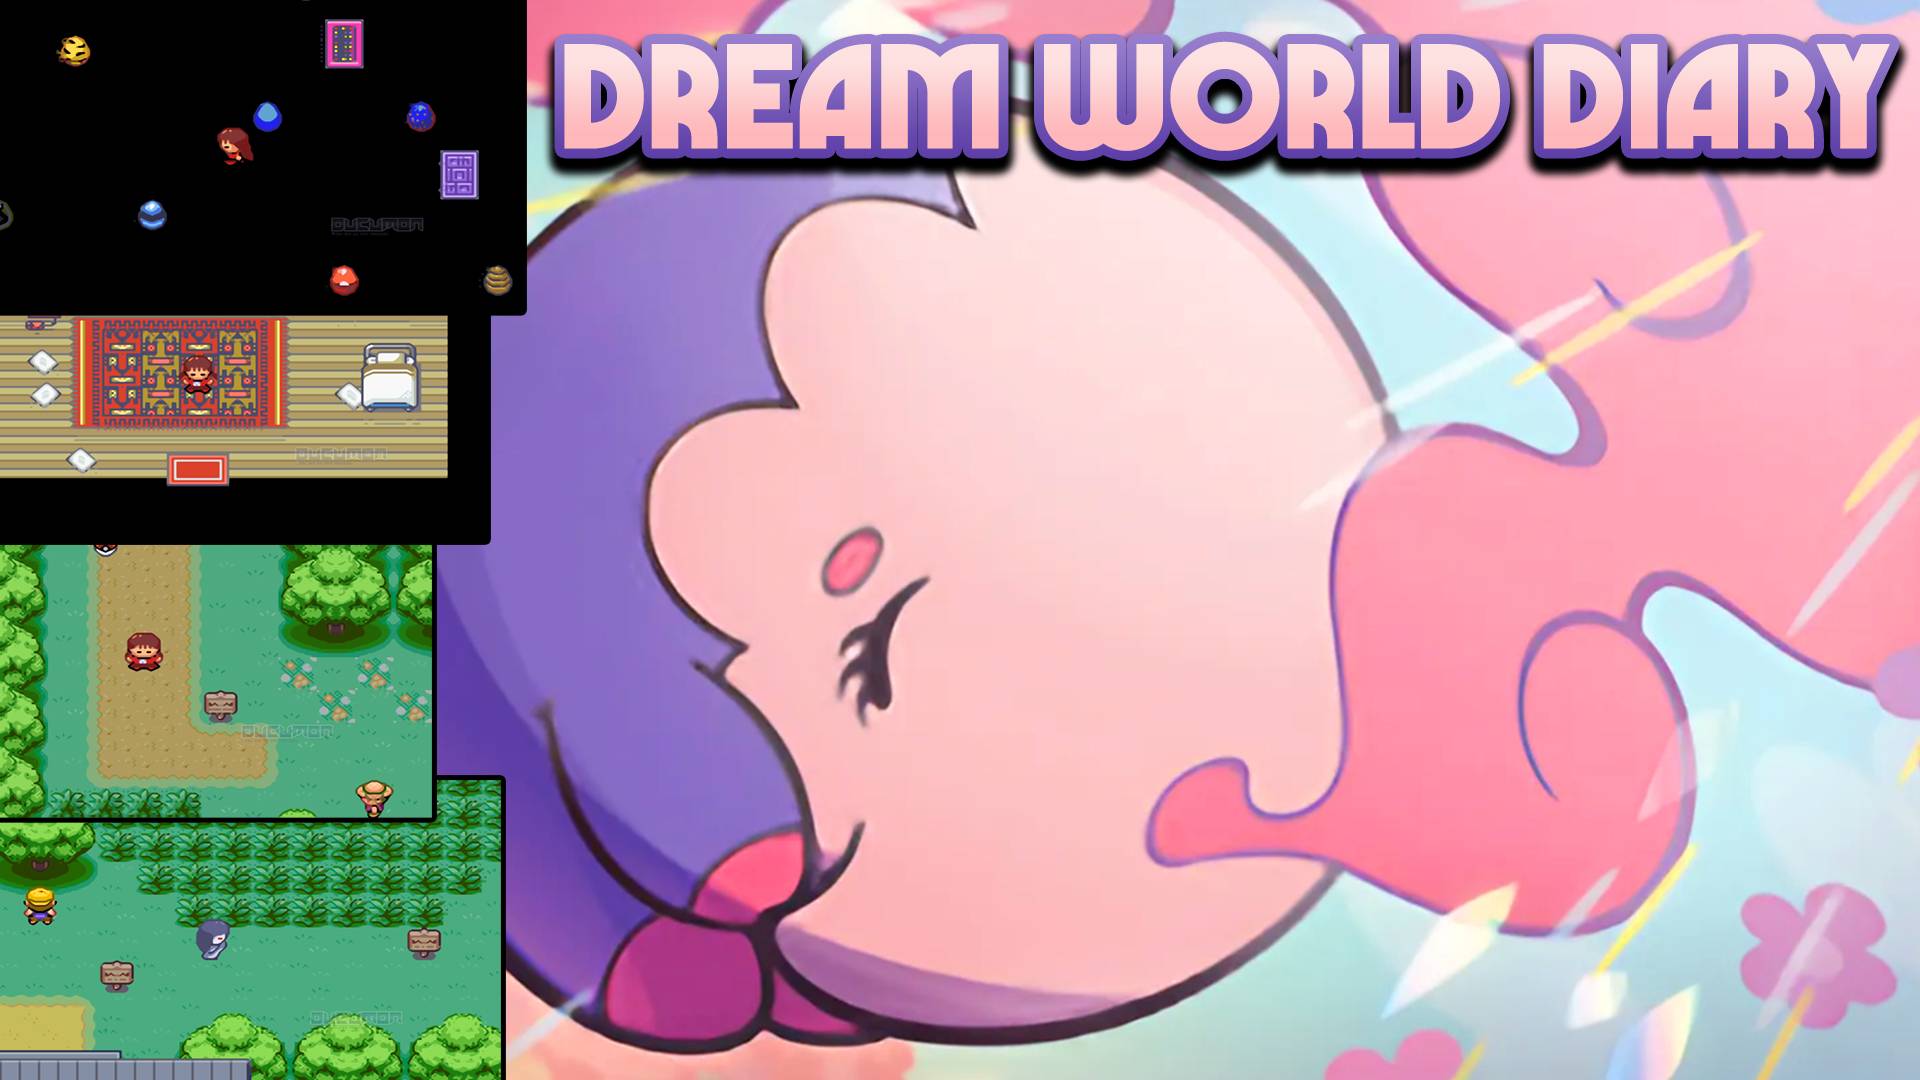 Pokemon Dream World Diary - Взлом GBA ROM вдохновлен игрой Yume Nikki, но с элементами покемонов.